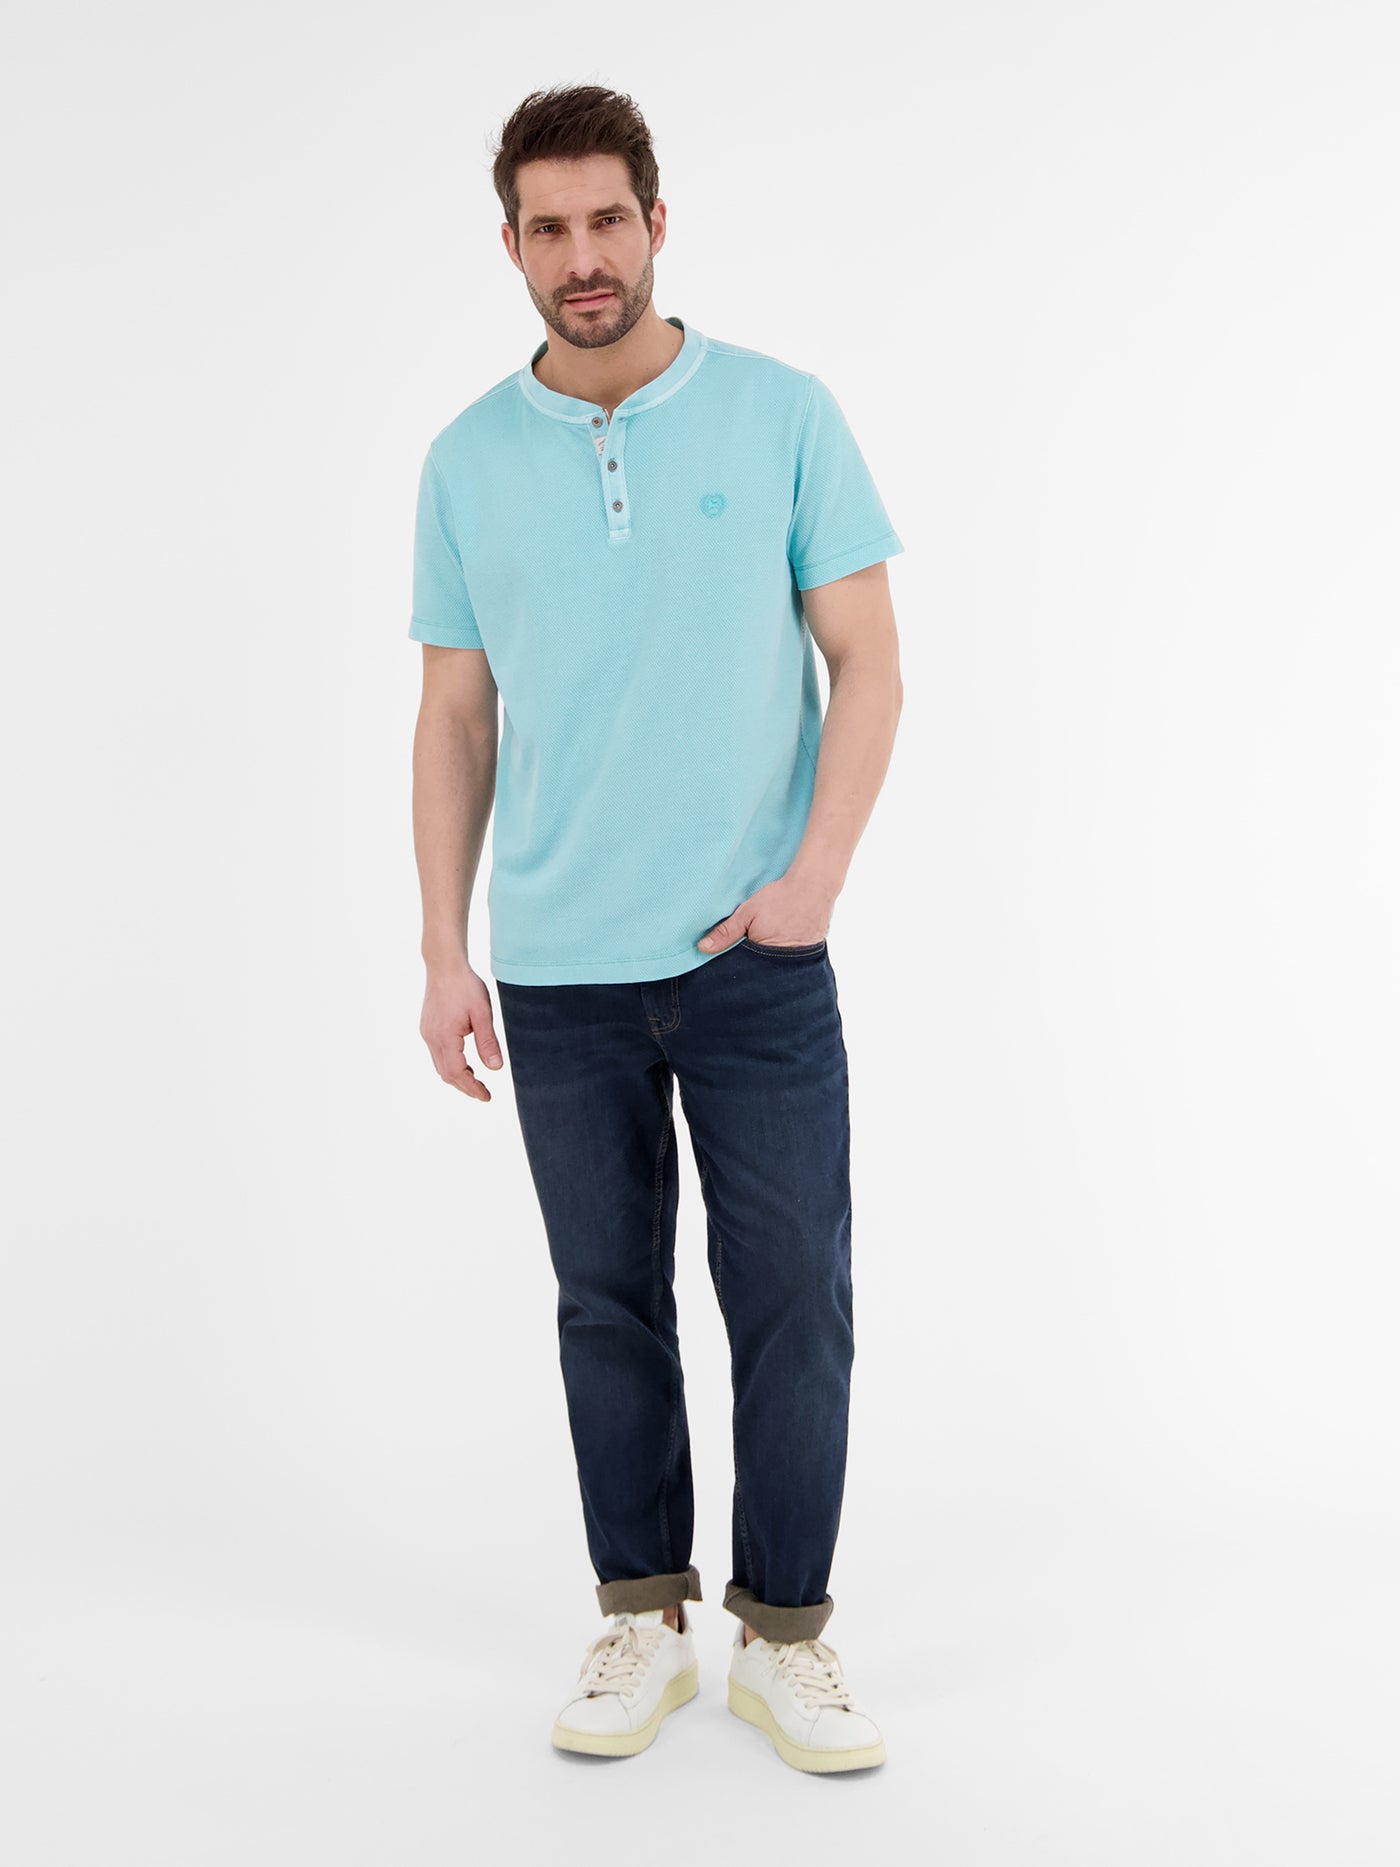 Shirt with a contrasting Serafino collar